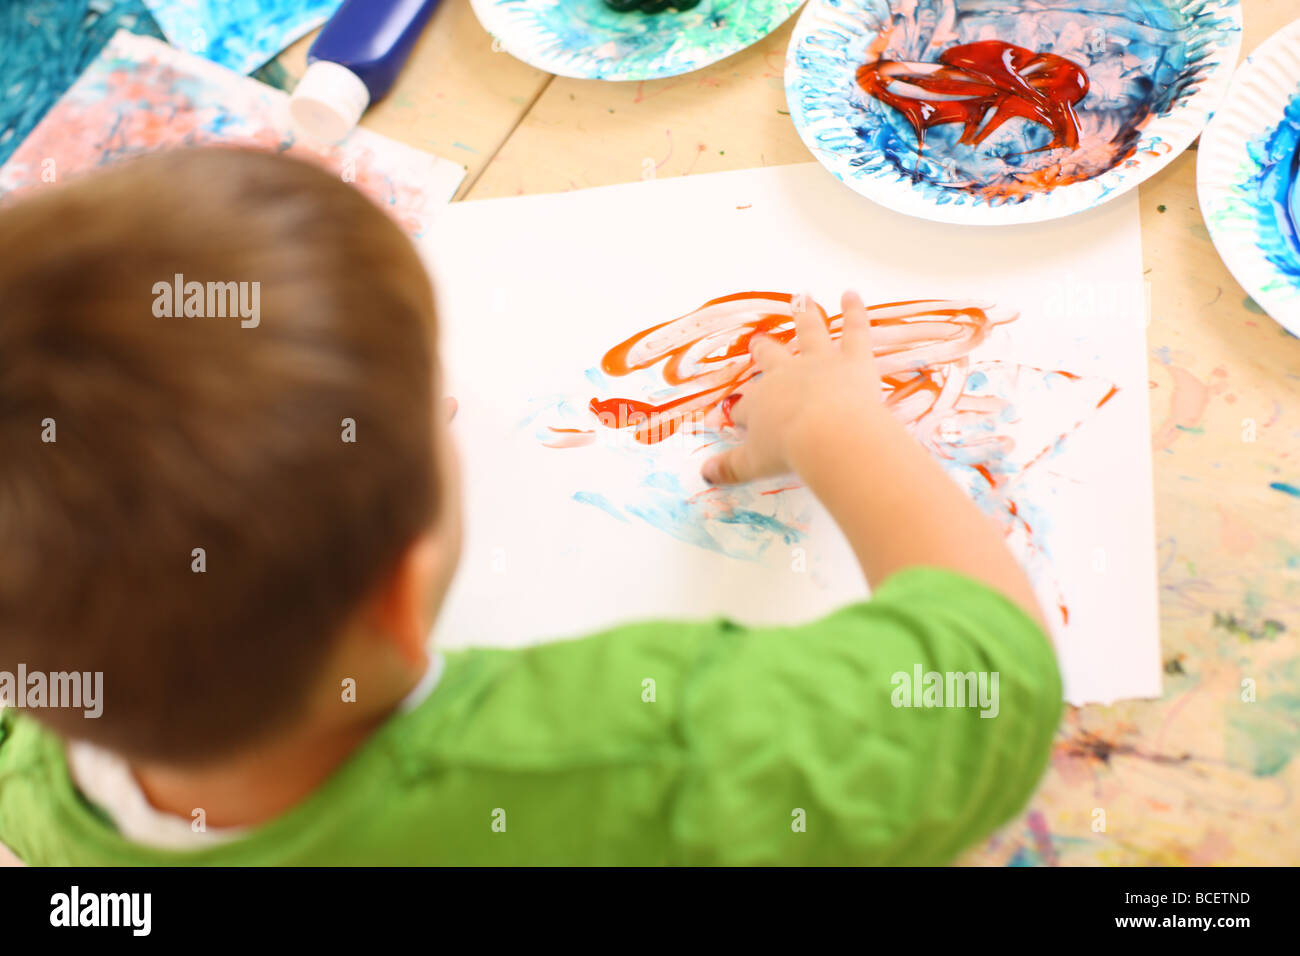 Preschool kid finger painting Stock Photo